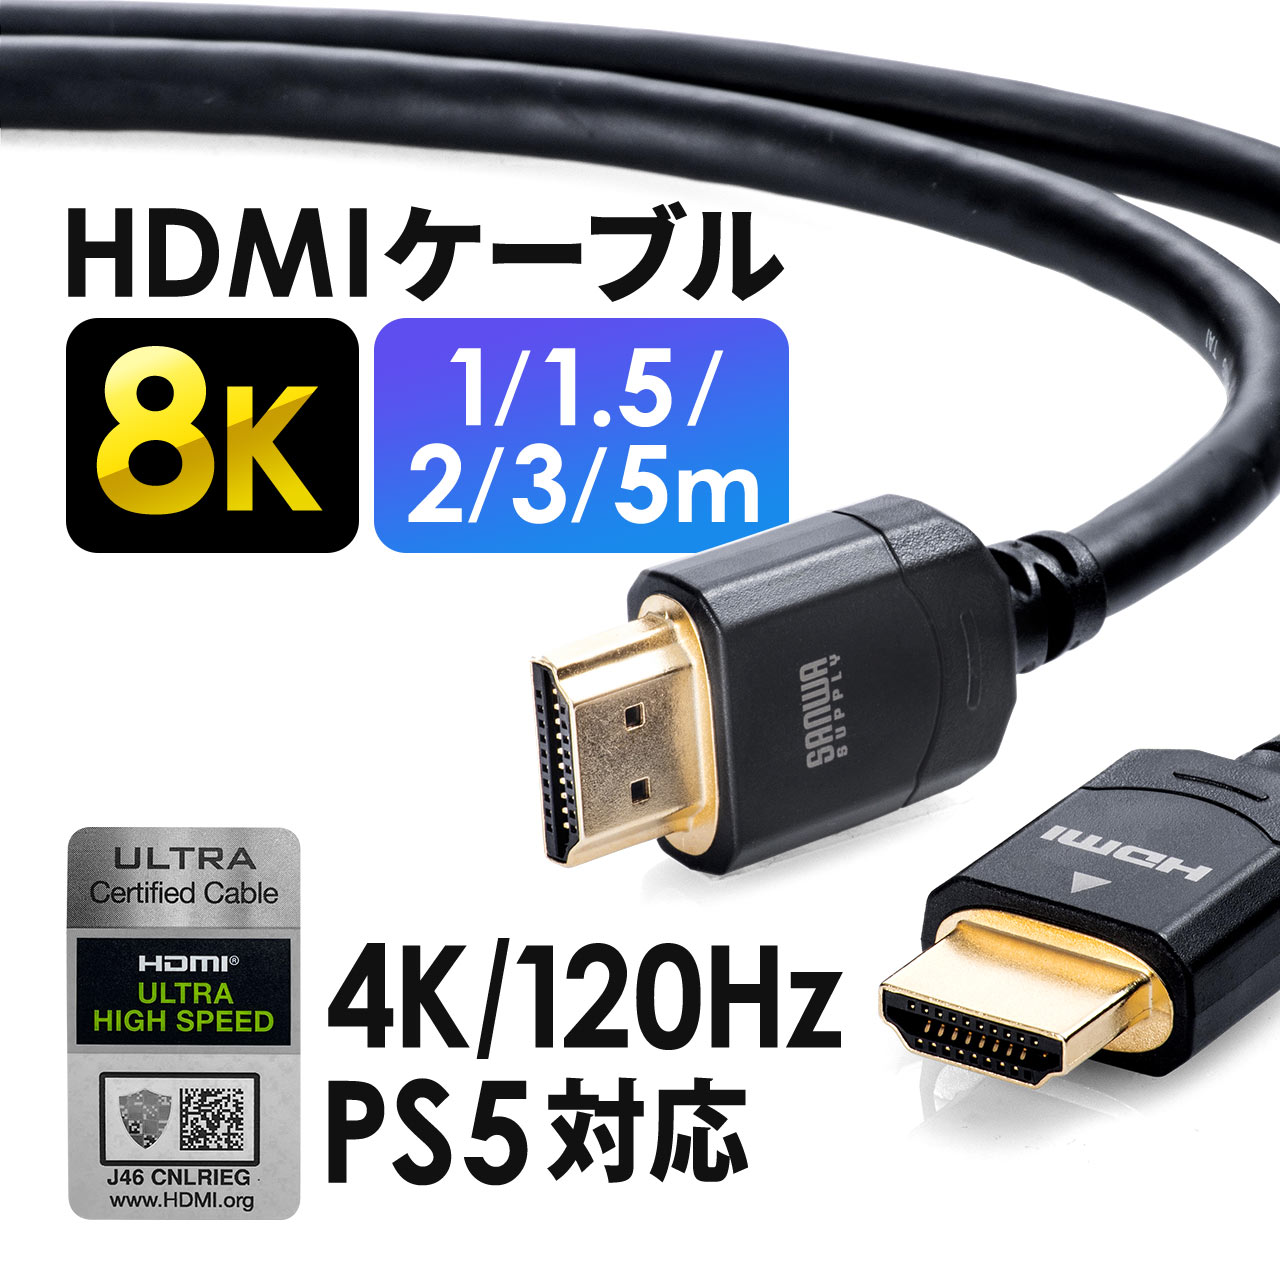 HDMI ケーブル OD5.5ブラック 1.5メートル 高画質 ハイスピード